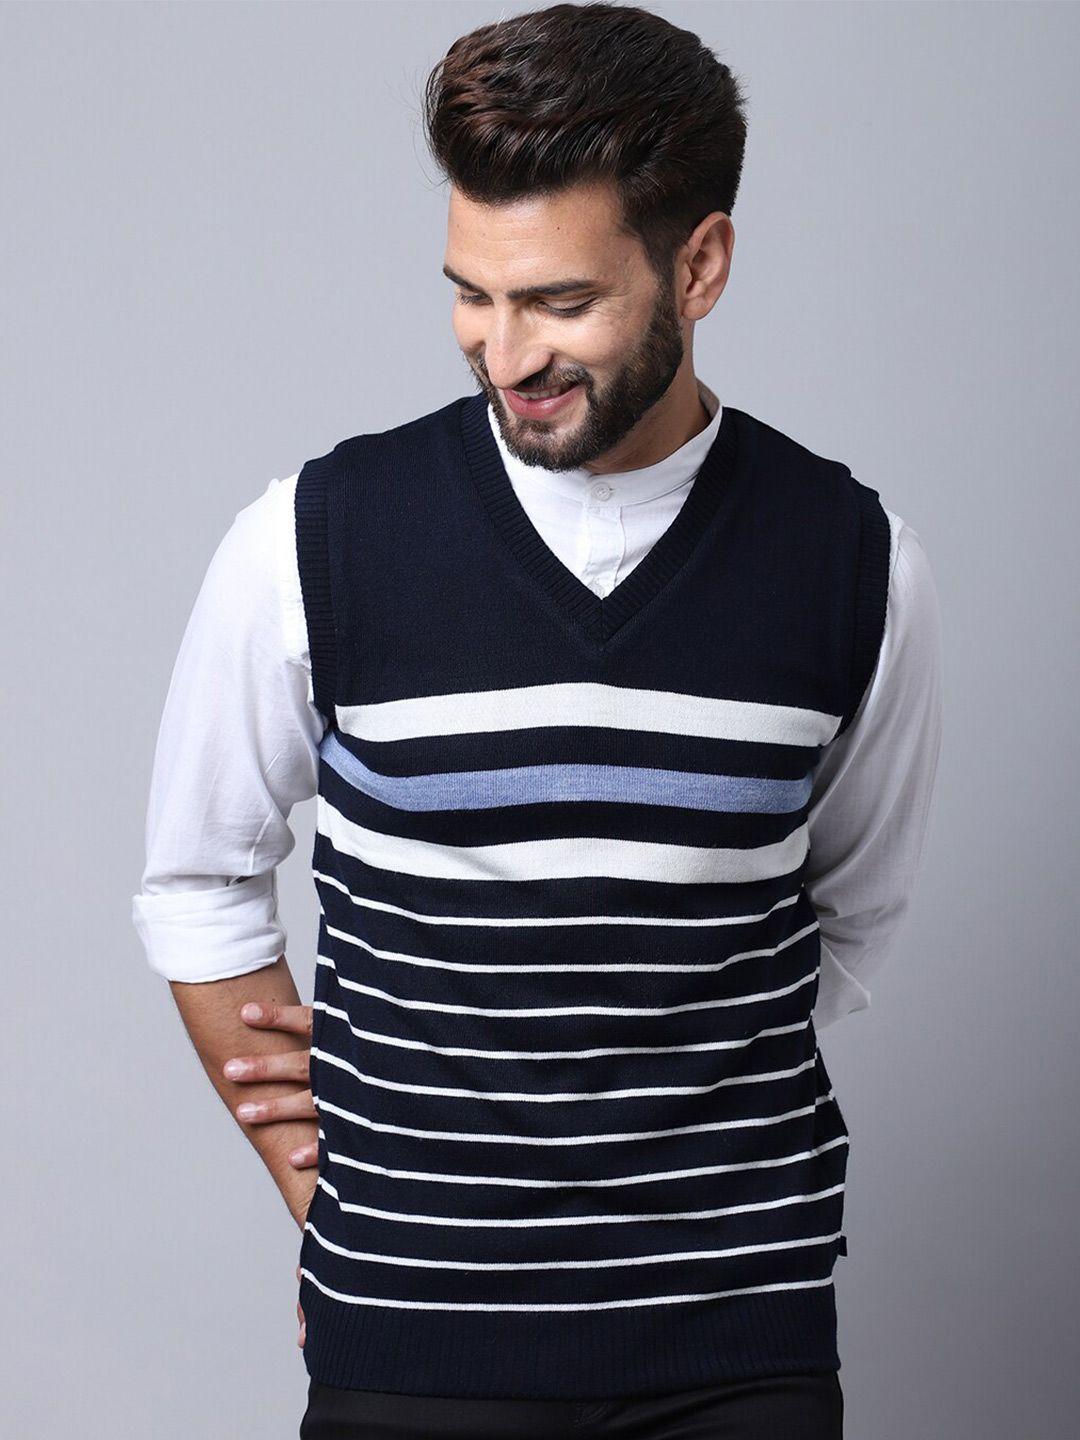 cantabil men navy blue & white striped sweater vest